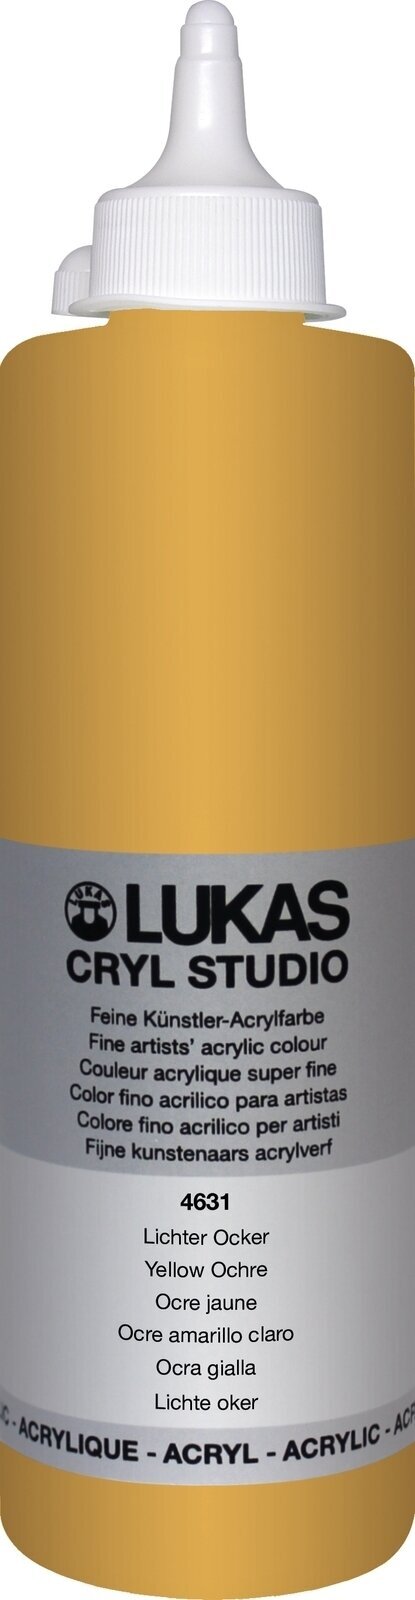 Peinture acrylique Lukas Cryl Studio Peinture acrylique 500 ml Yellow Ochre